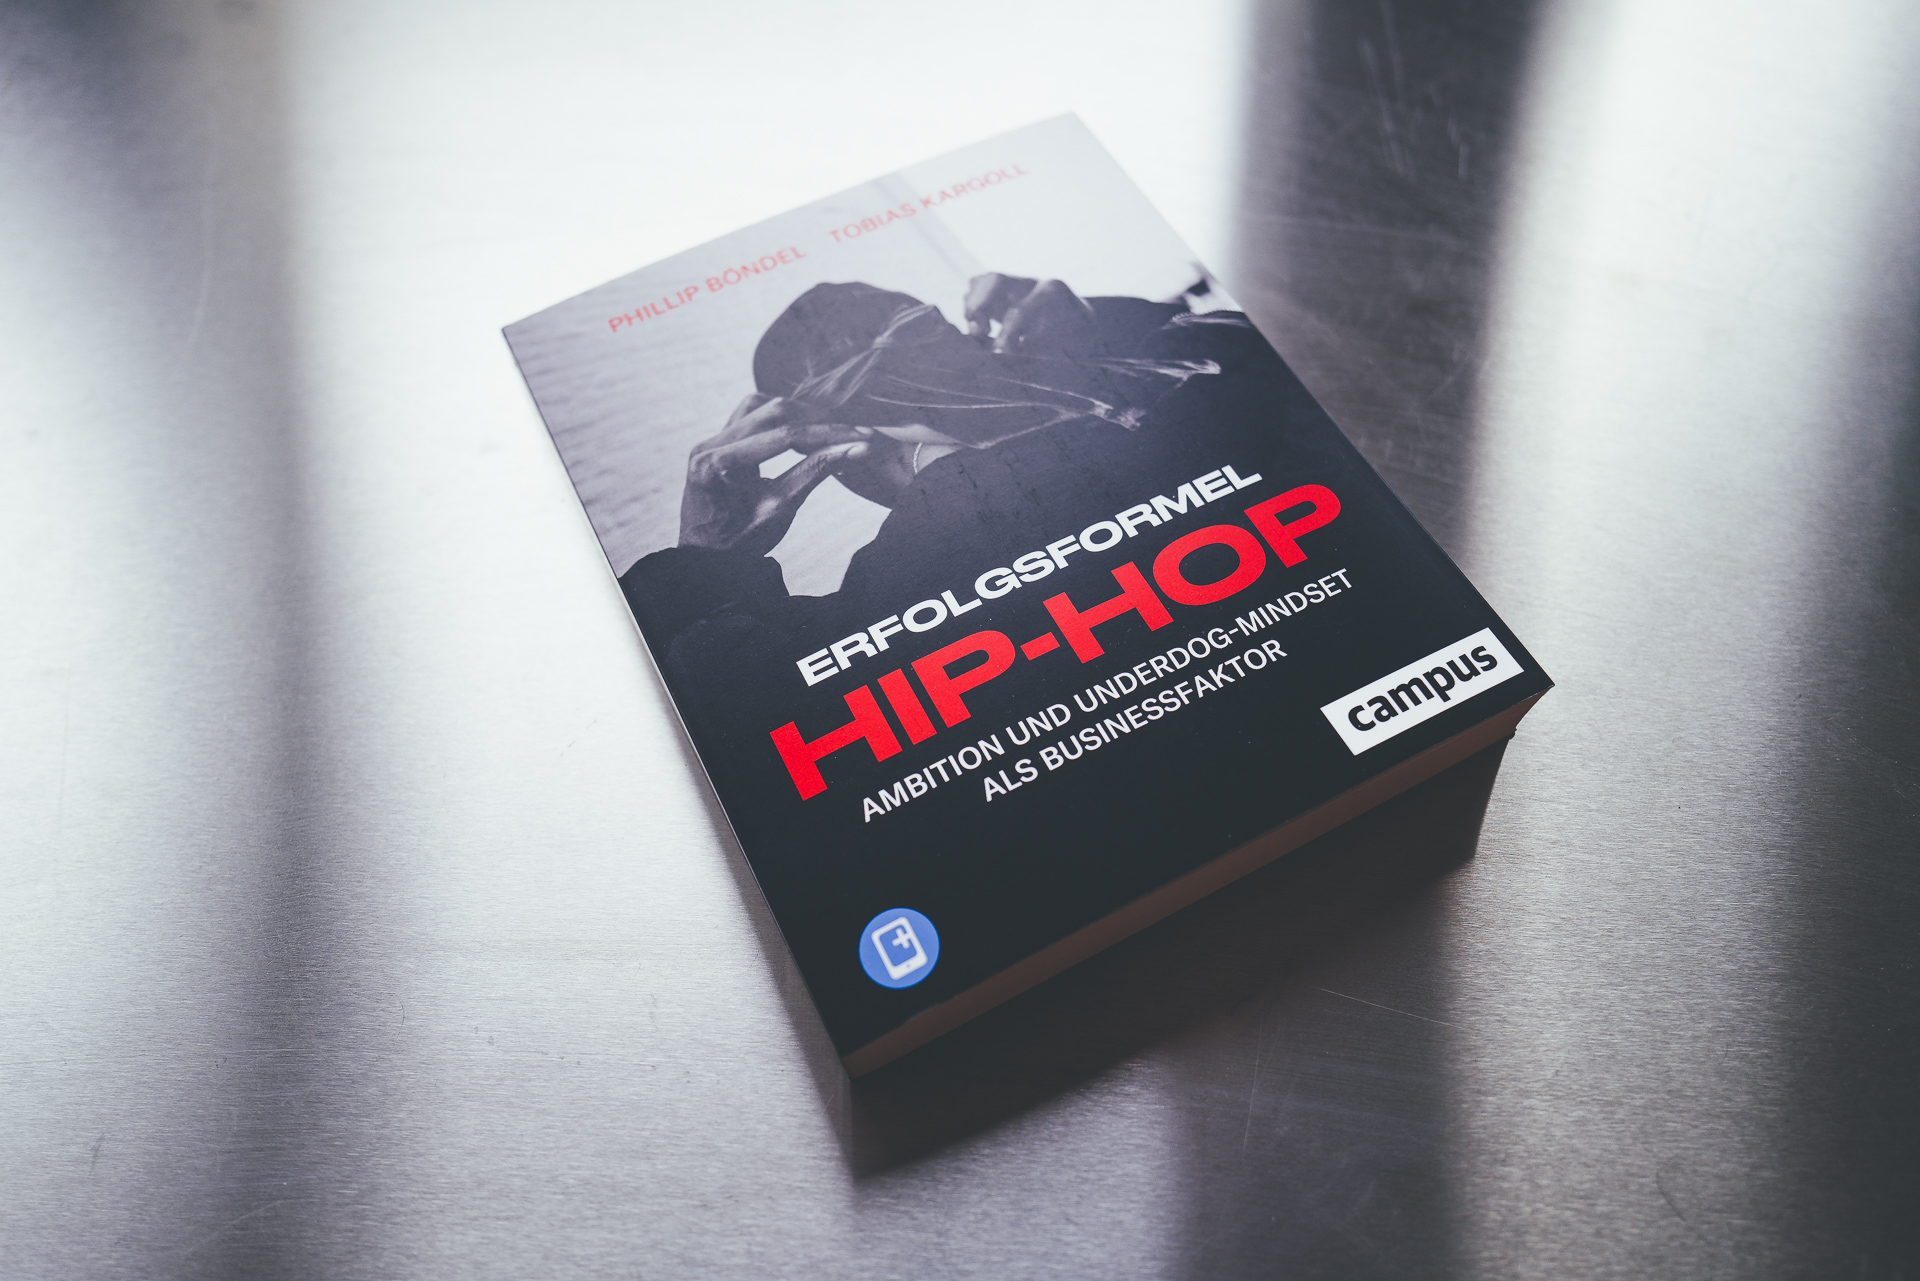 Erfolgsformel Hip-Hop Buch Tipp The Ambition